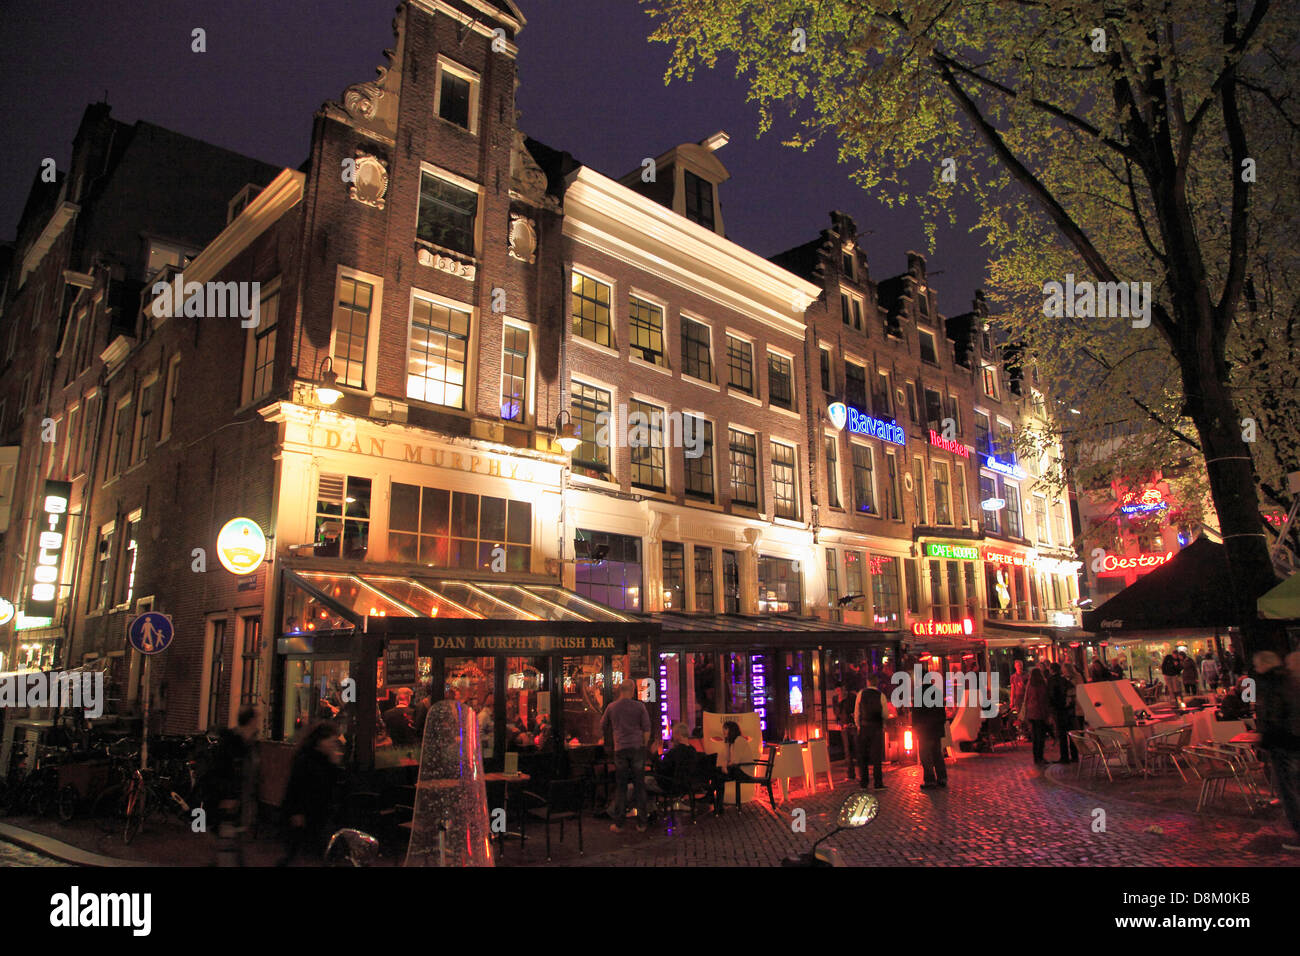 Club Smokey Amsterdam - Party All Night Long in Rembrandtsplein!